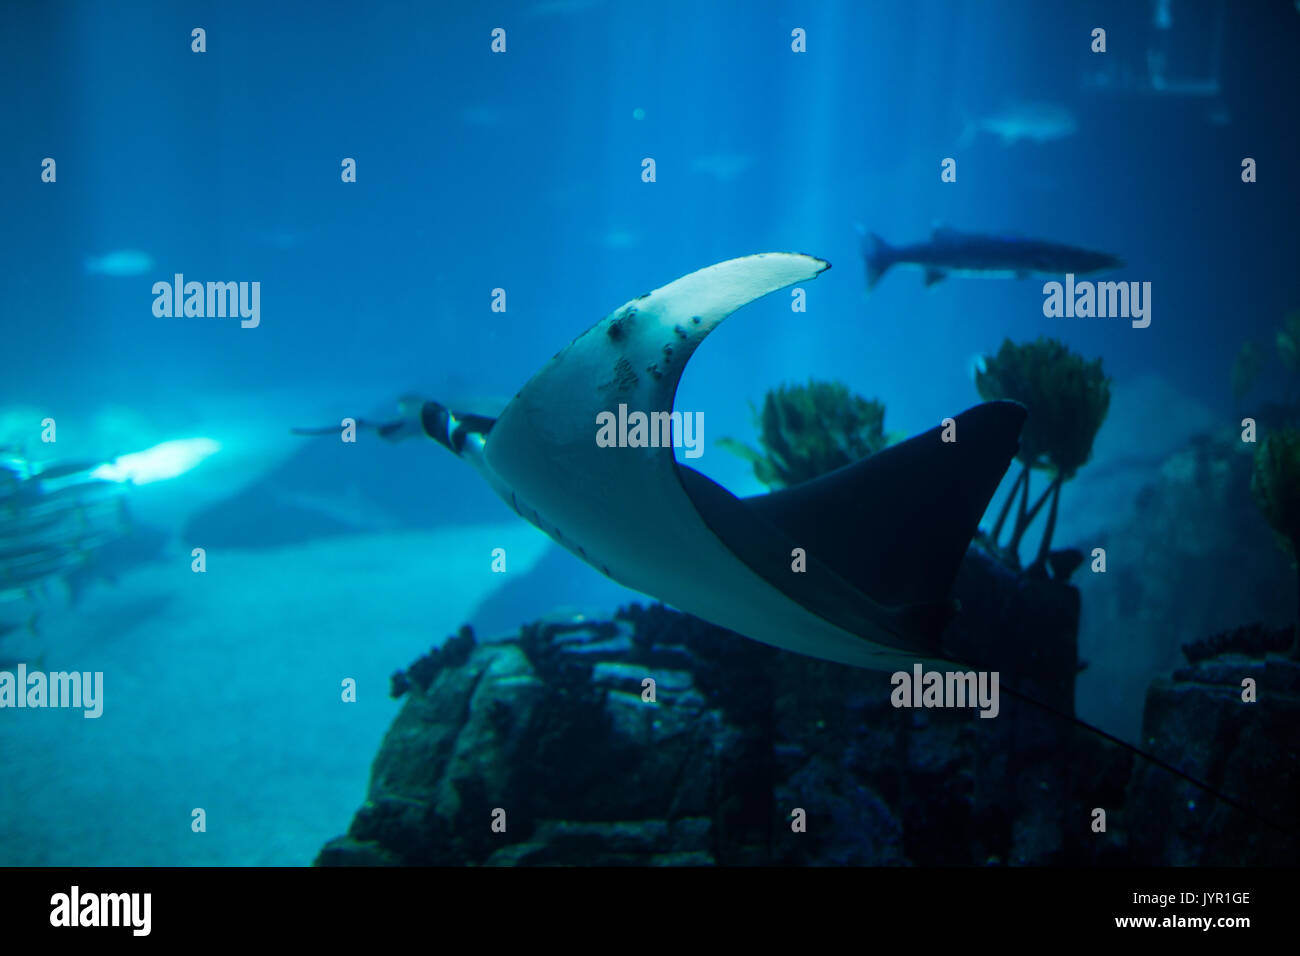 Electric ray fish in aquarium. Cramp-fish in blue water. Stock Photo